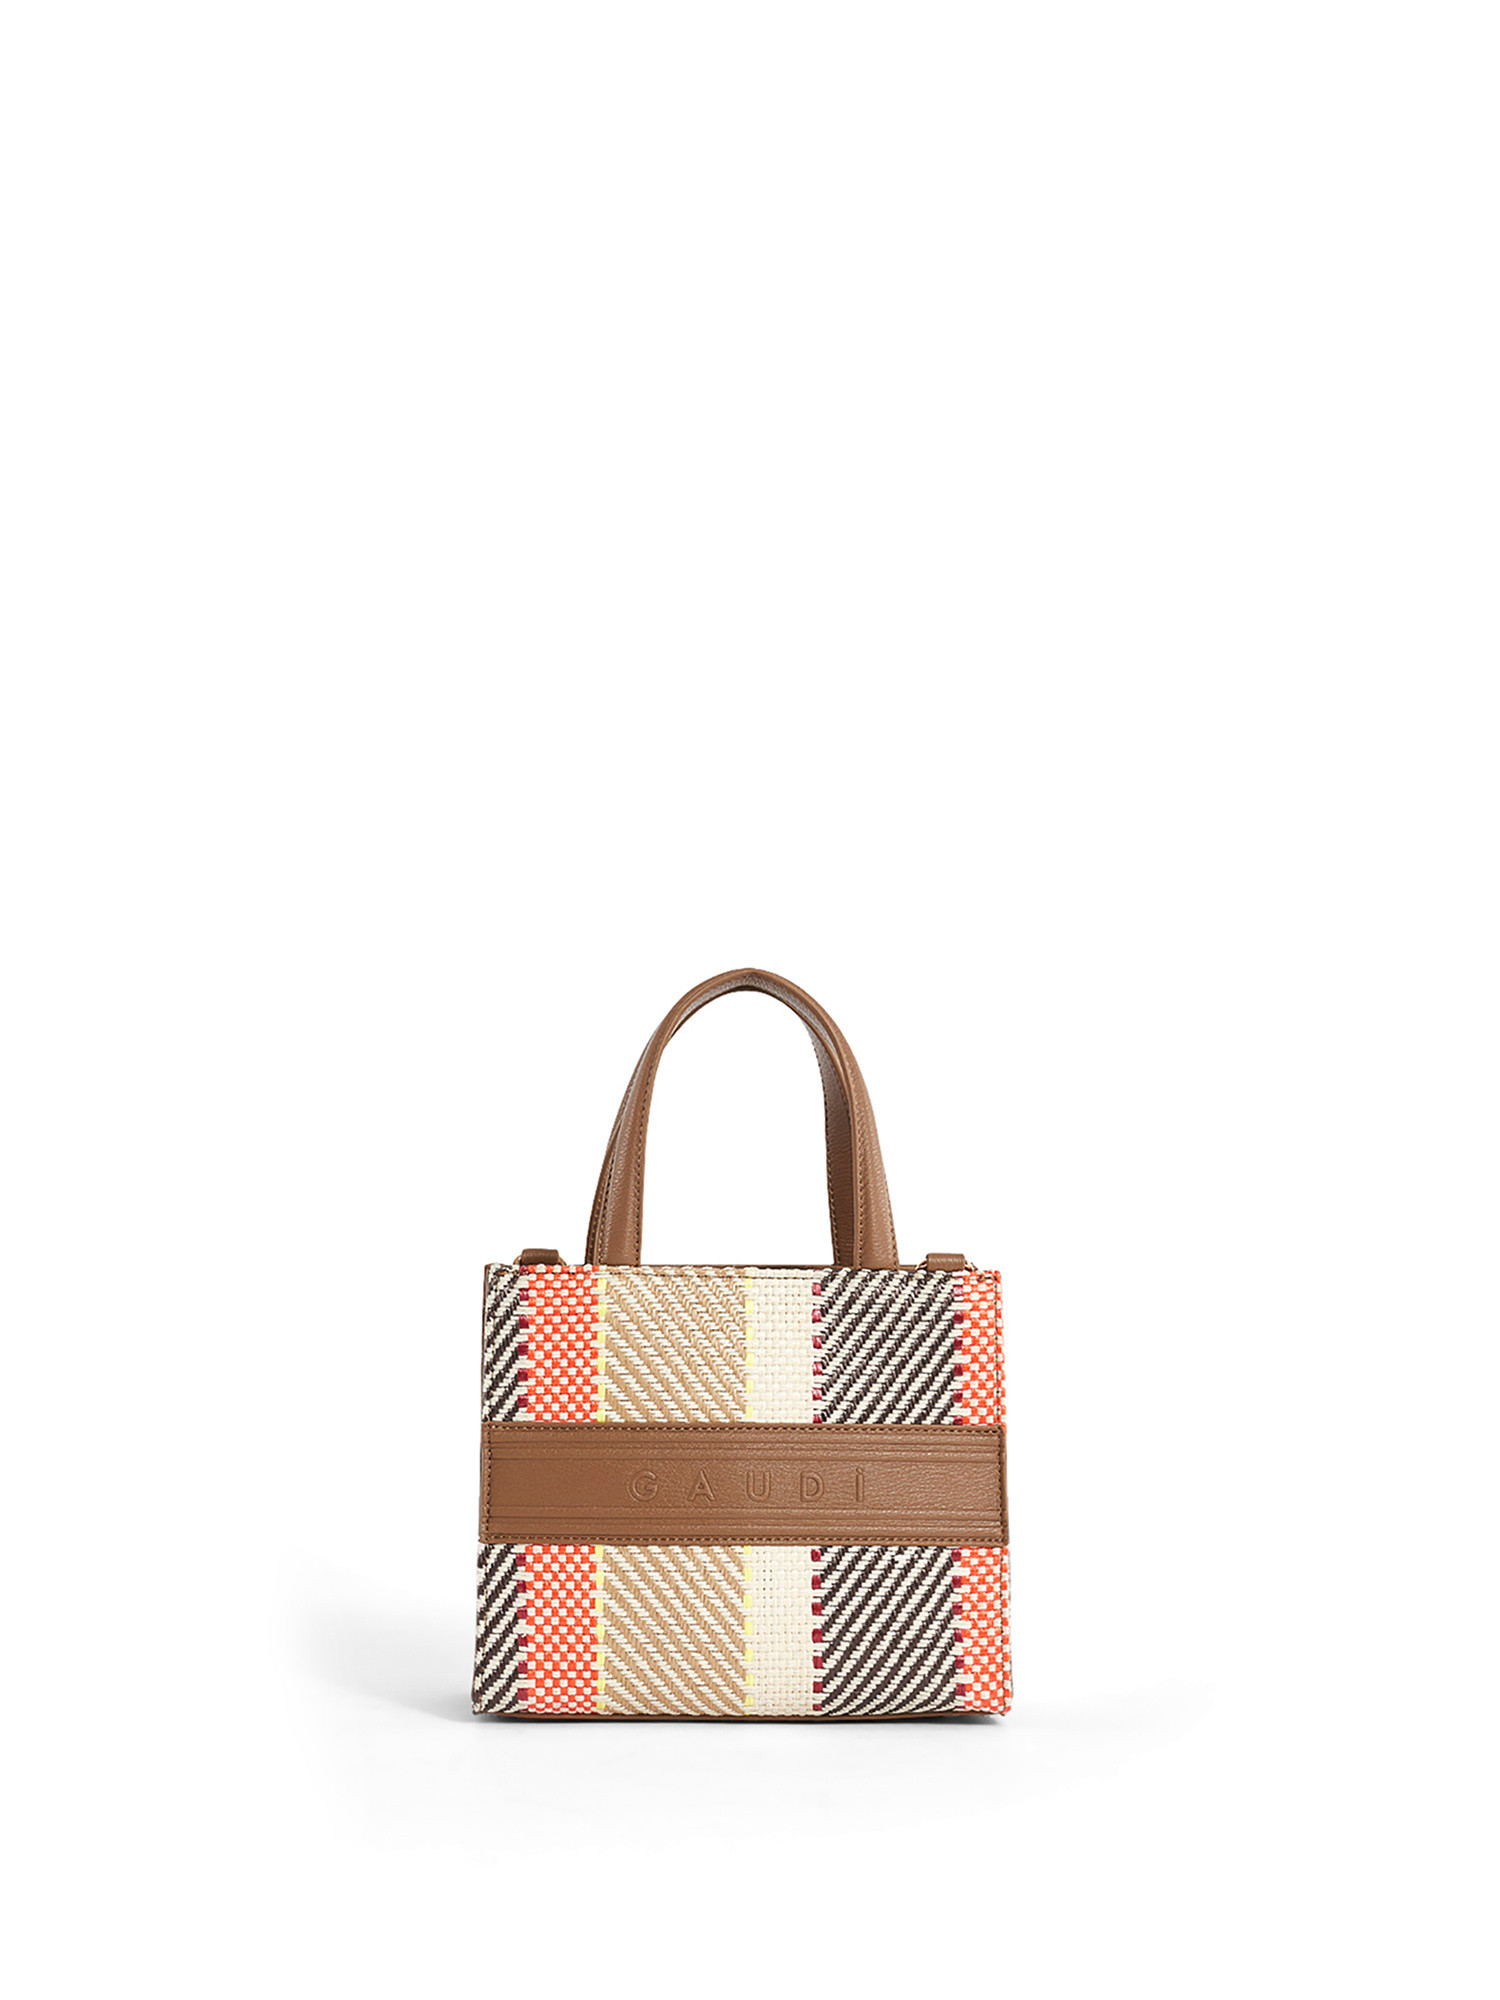 Gaudì - Raffia and imitation leather mini shopping bag, Camel, large image number 1